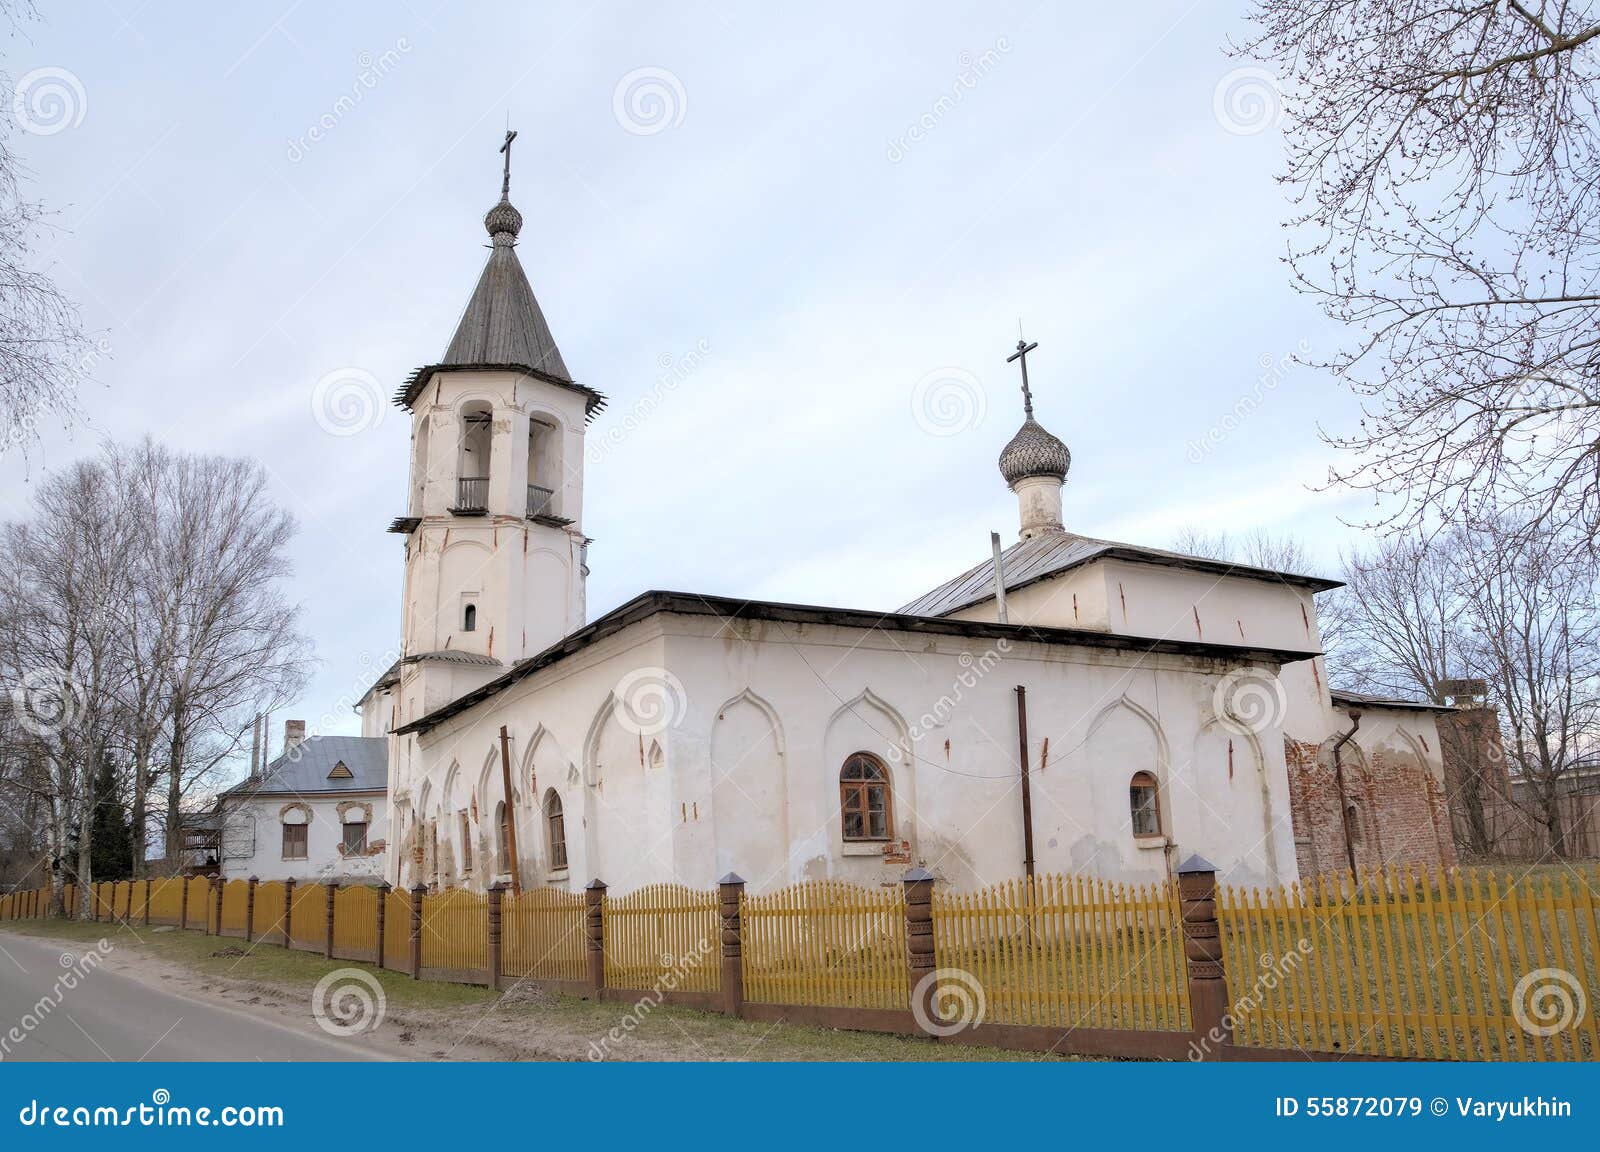 mikhail malein's (malefic) church. veliky novgorod